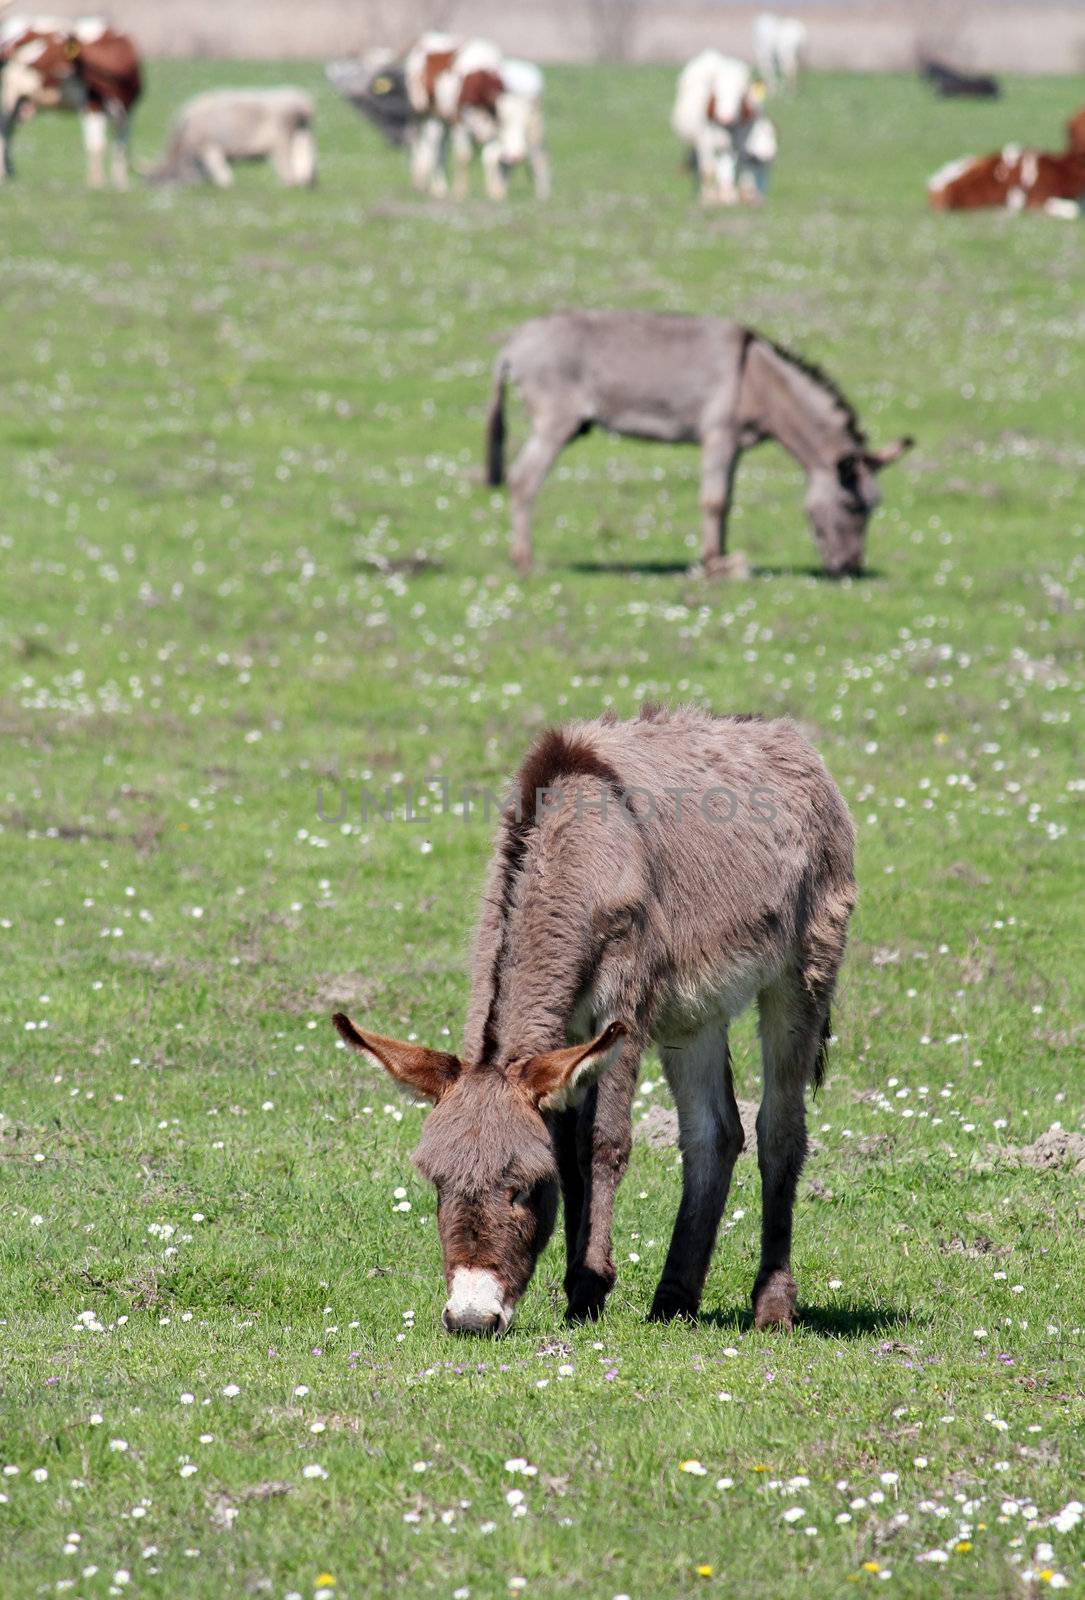 donkeys on pasture farm scene by goce